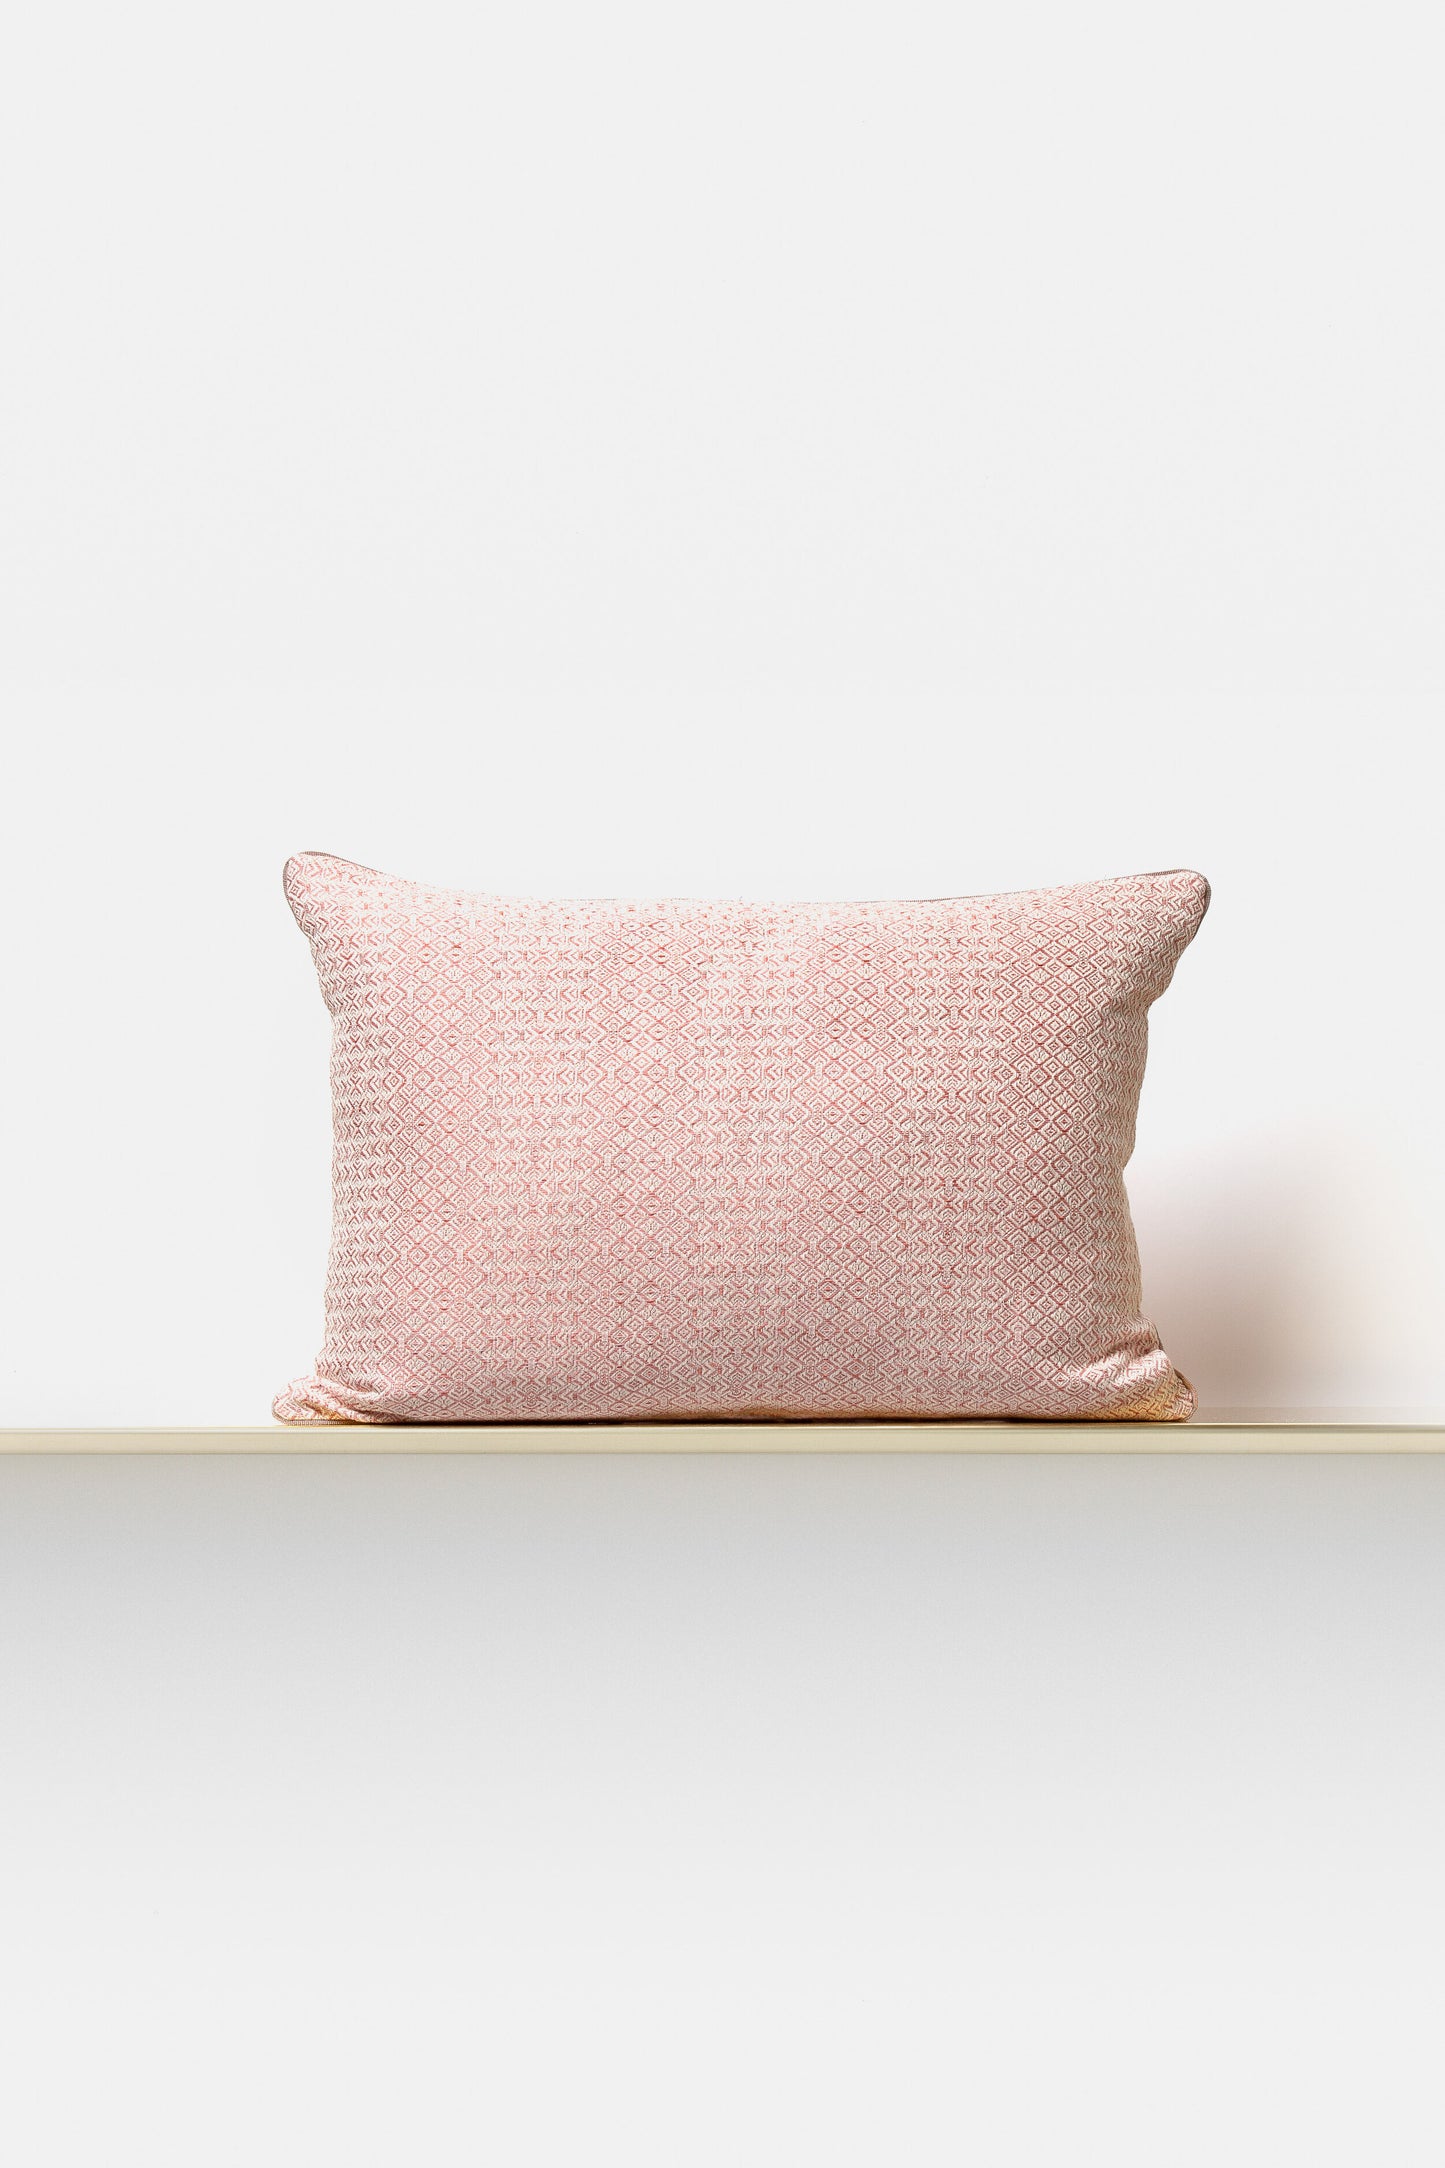 "Intreccio" cushion in India Pink